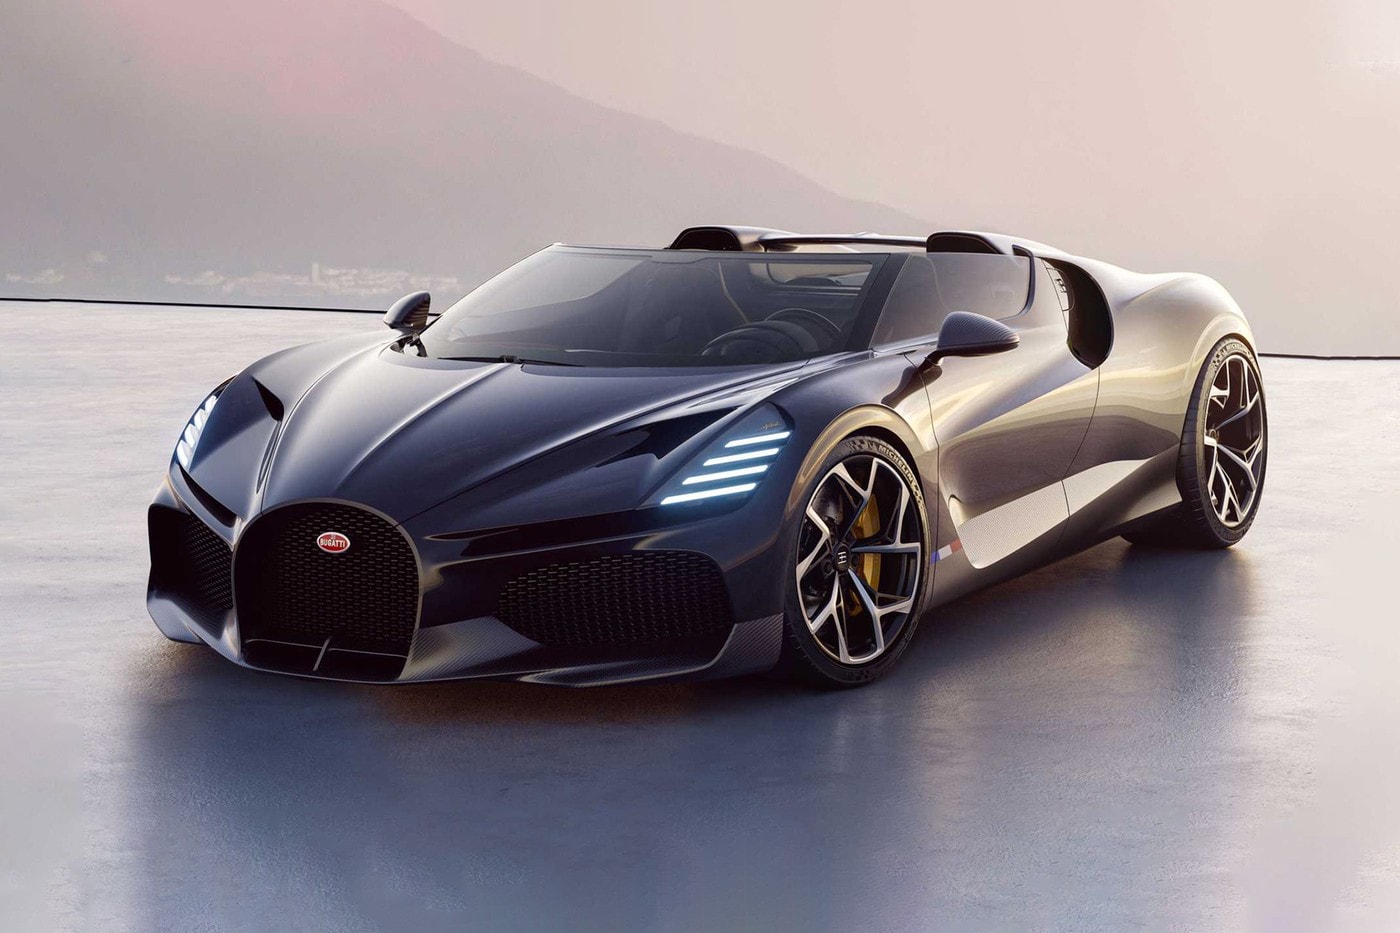 Bugatti 正式发表全球限量 99 辆最新超跑车型 Mistral